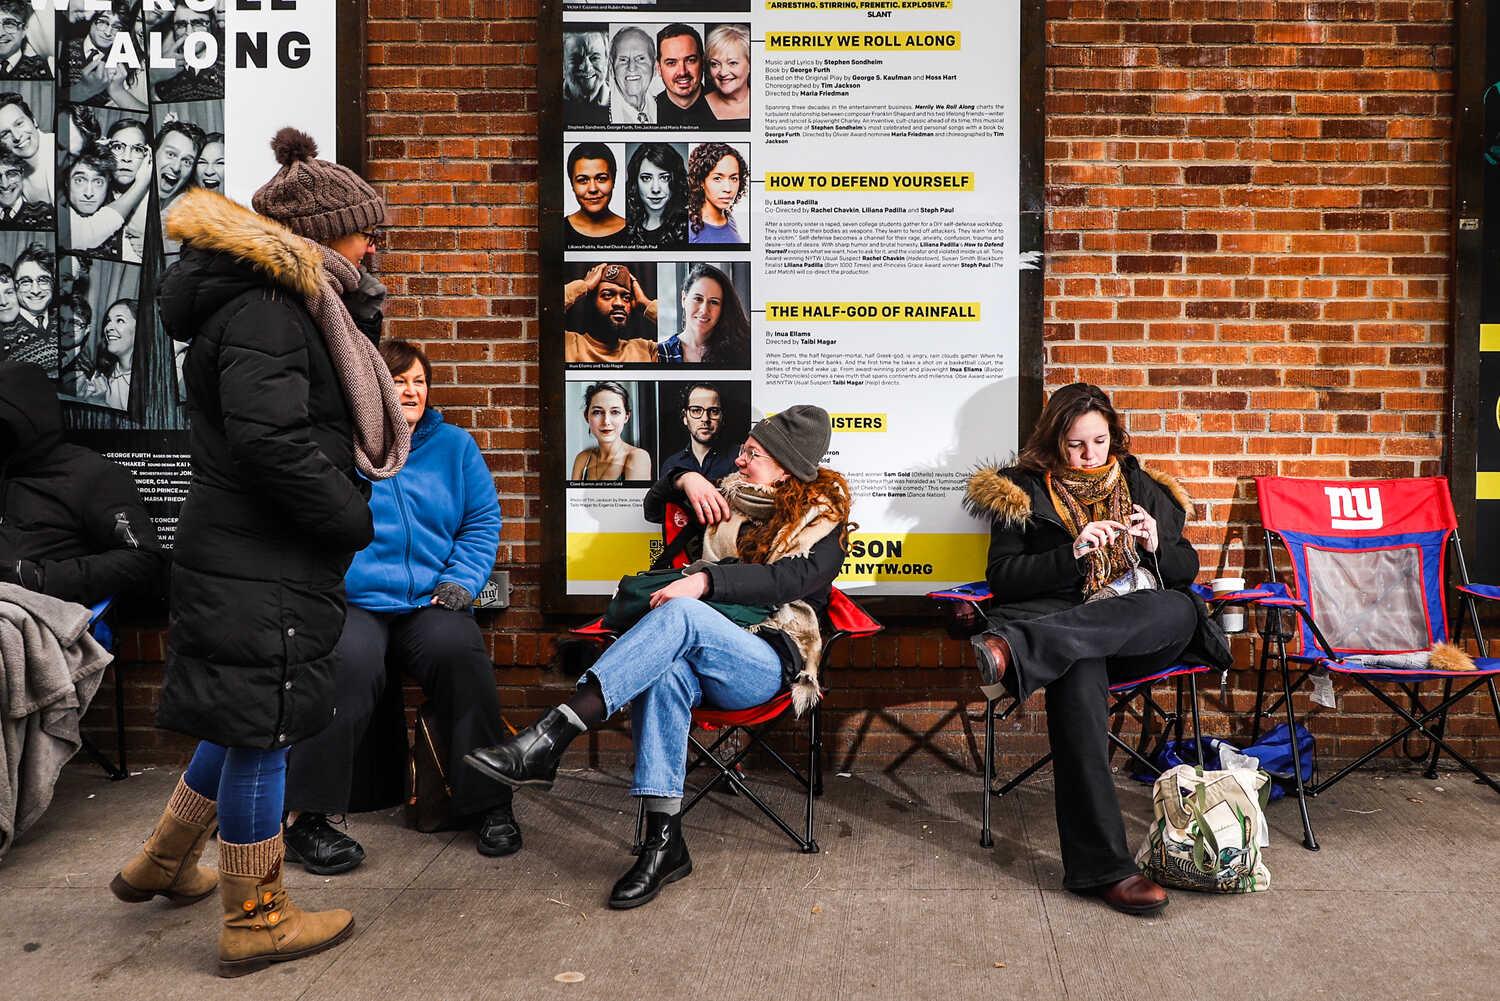 Women in winter coats wait outside a theater for last-minute tickets.